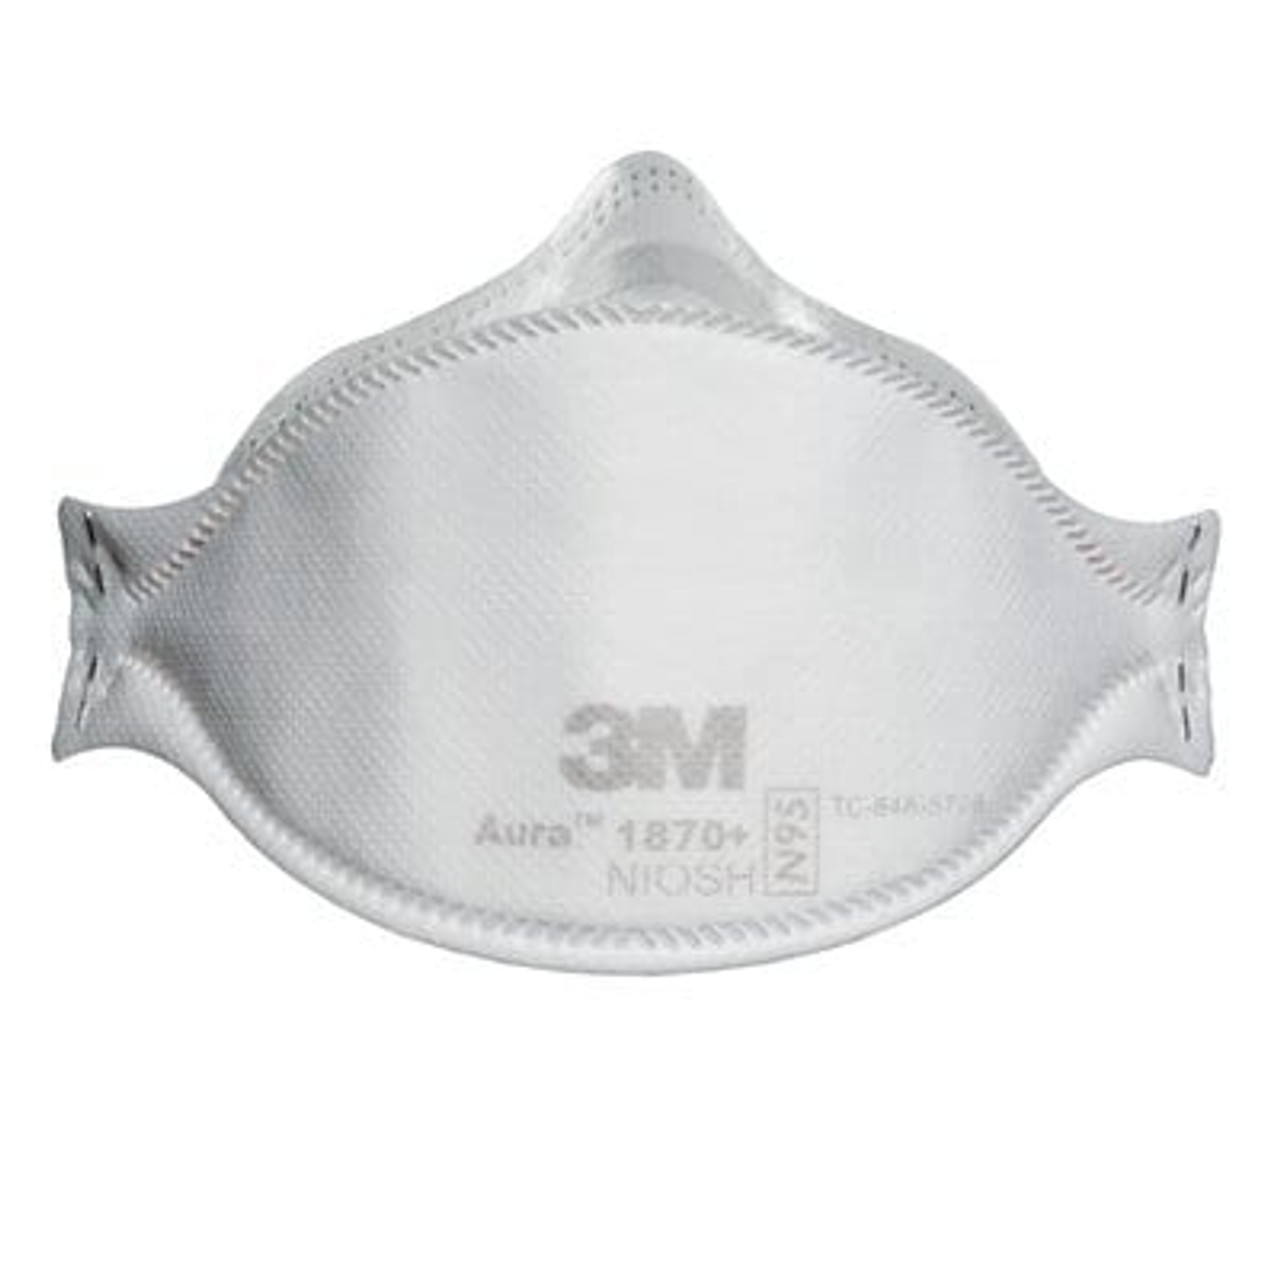 3M Aura Particulate Respirator N95 Face Mask, Flat Fold, 20/pk